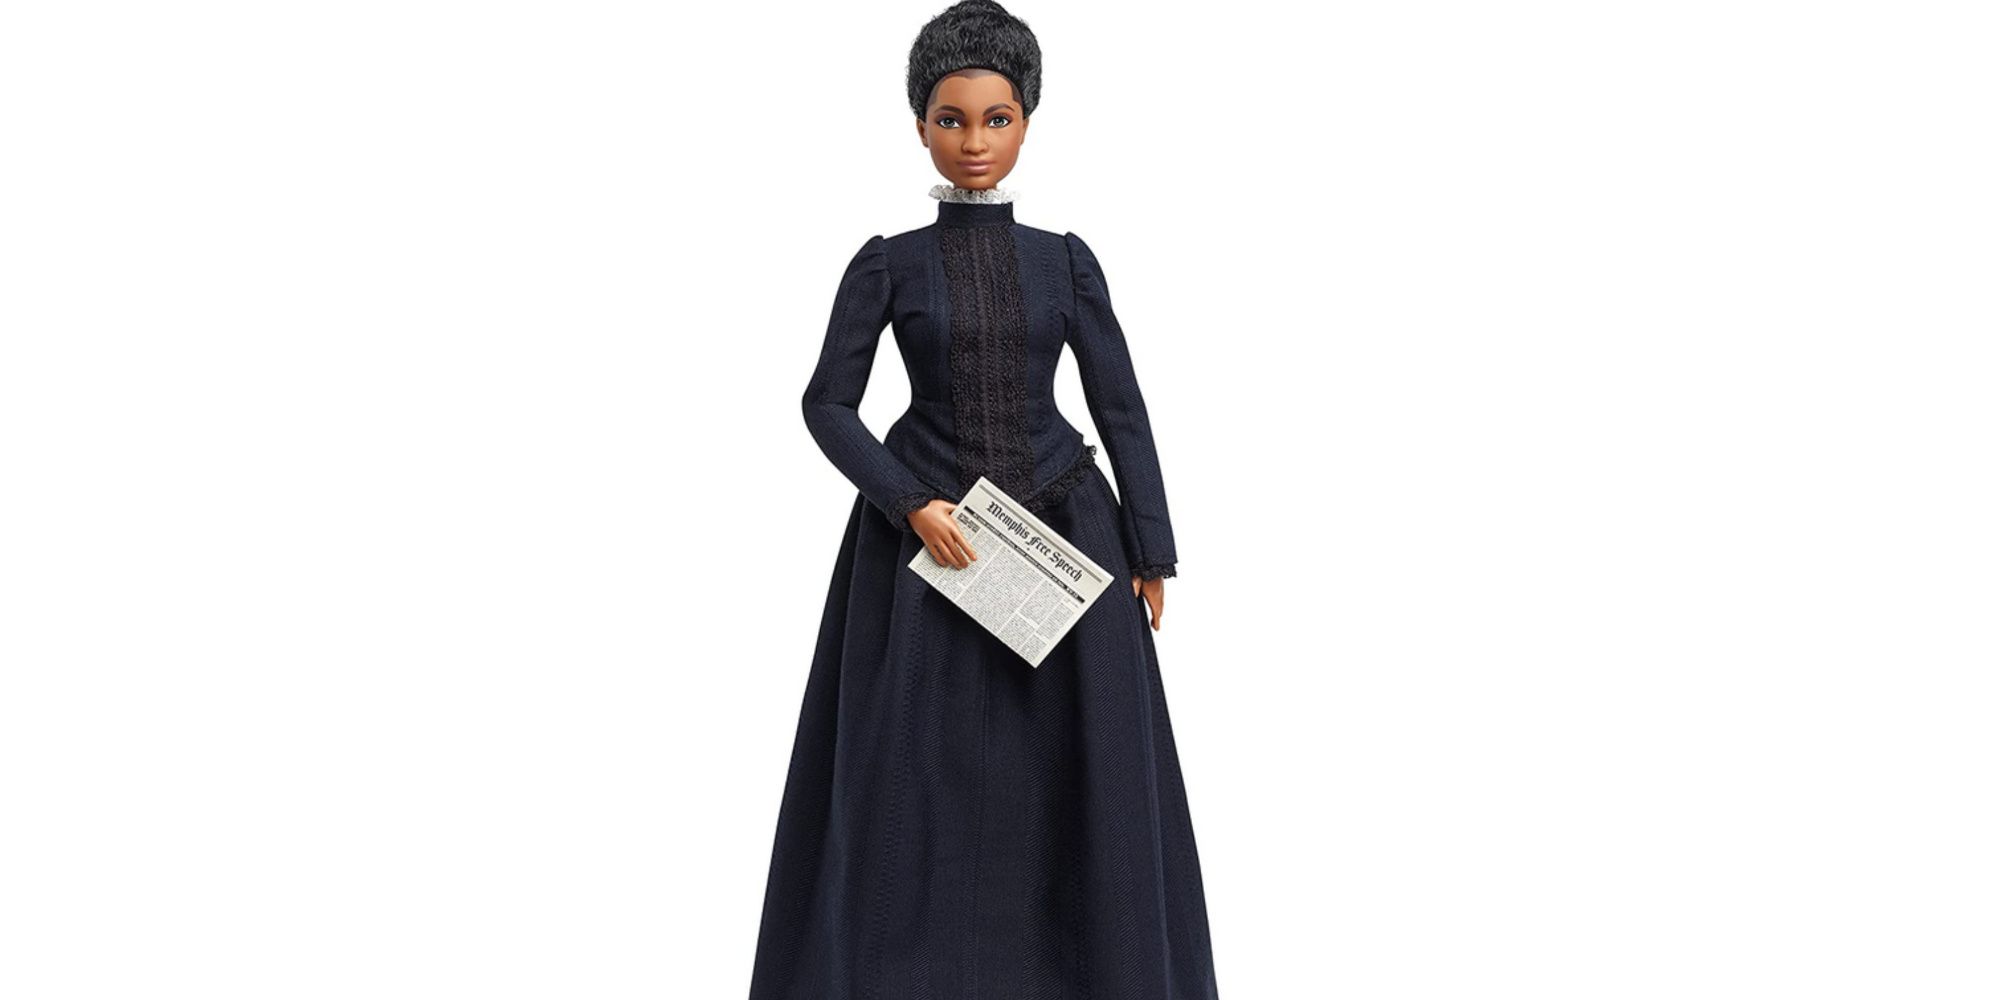 Ida B. Wells doll from Barbie's Inspiration Woman series